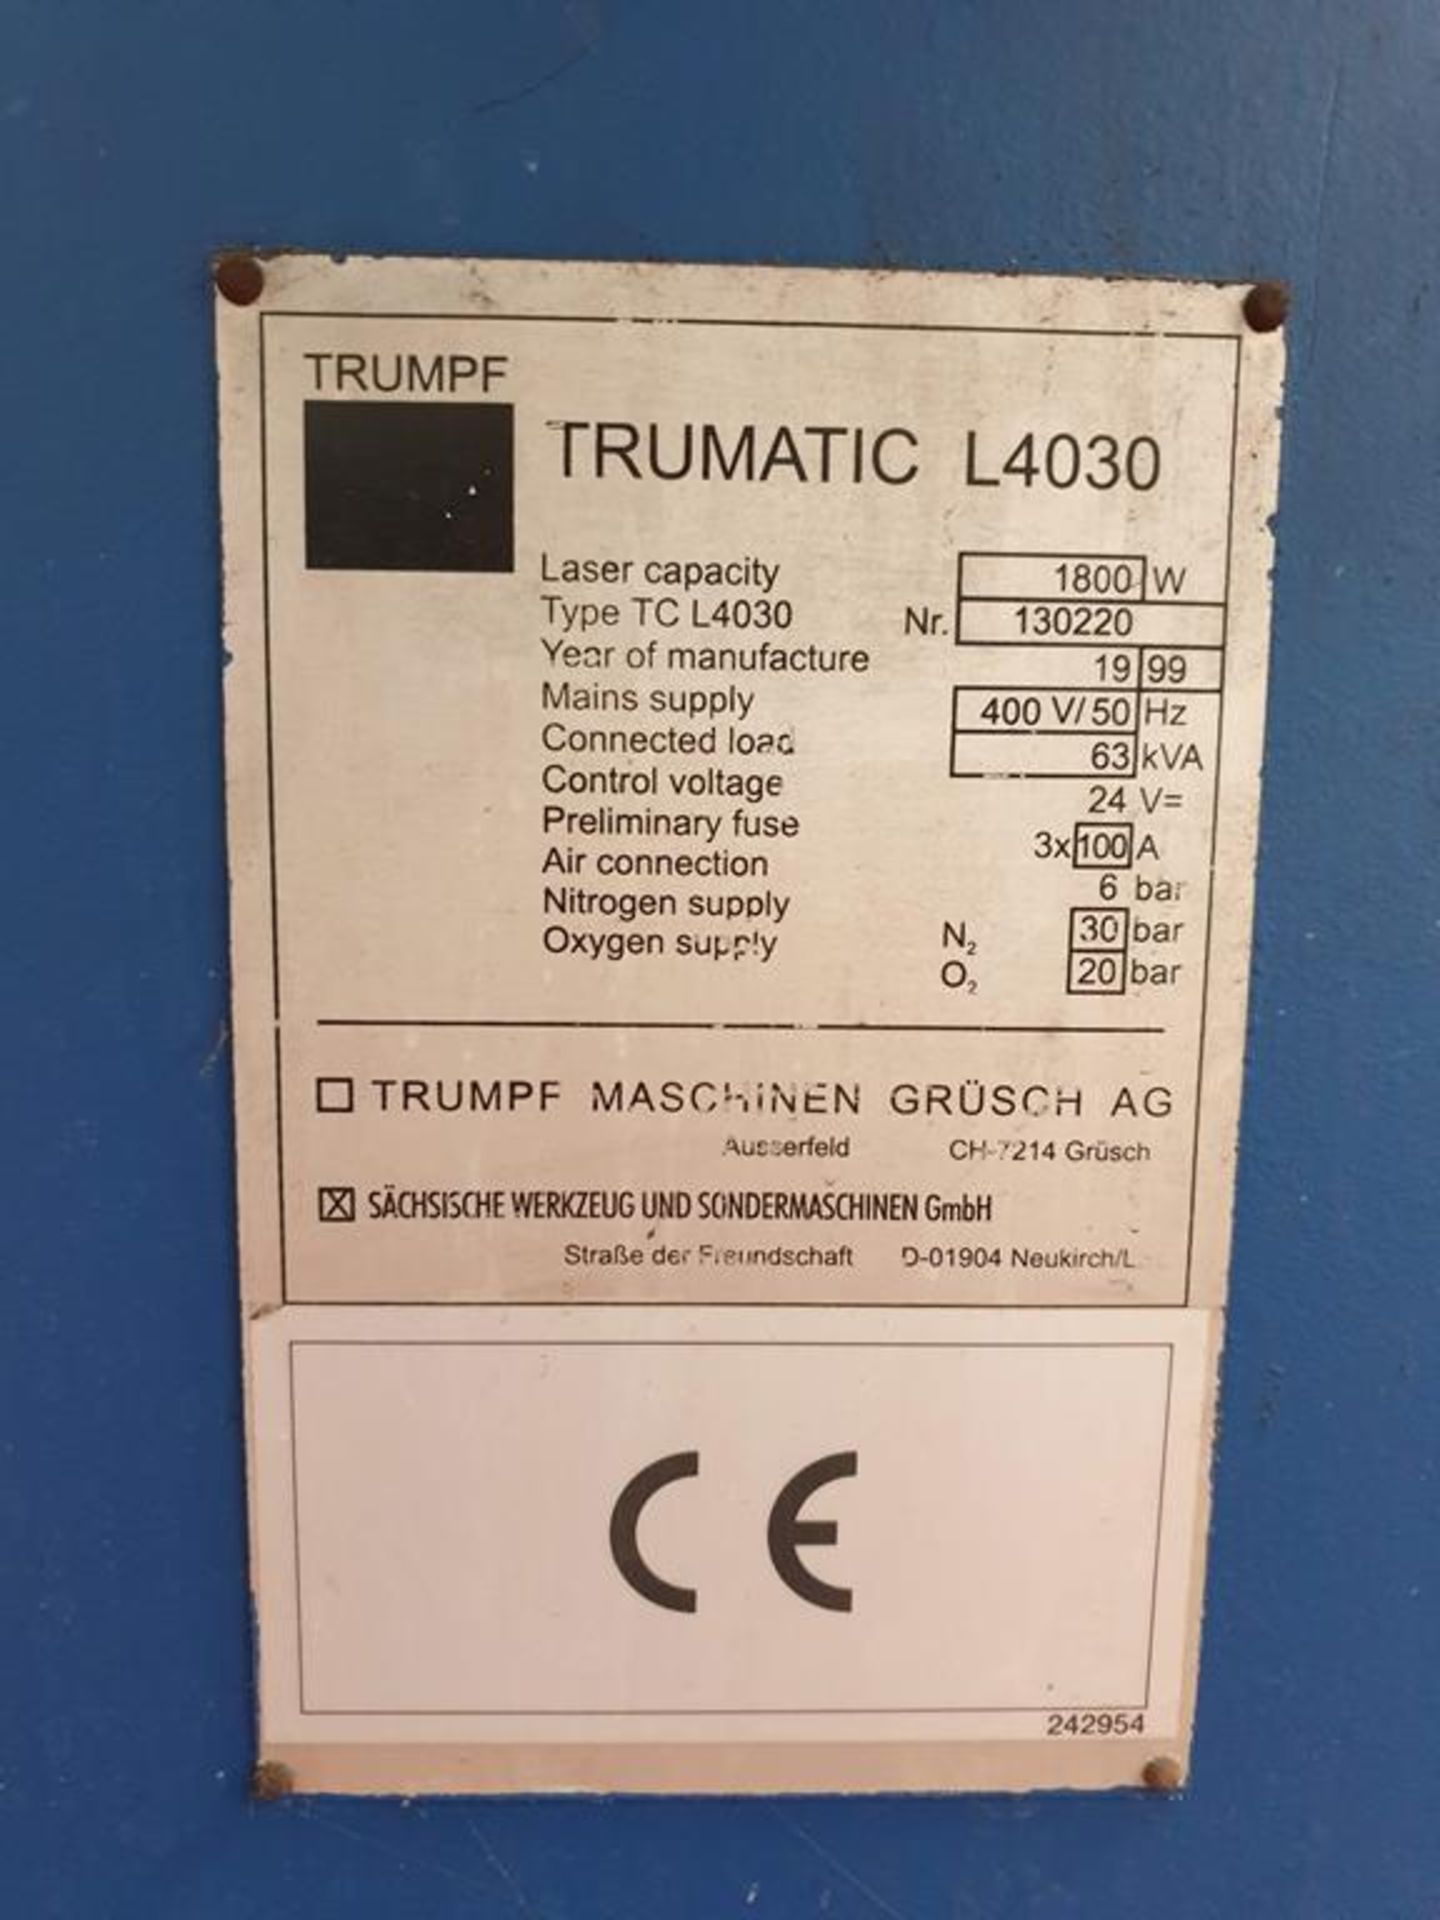 Trumpf Trumatic L4030 Laser Cutter - Image 5 of 7